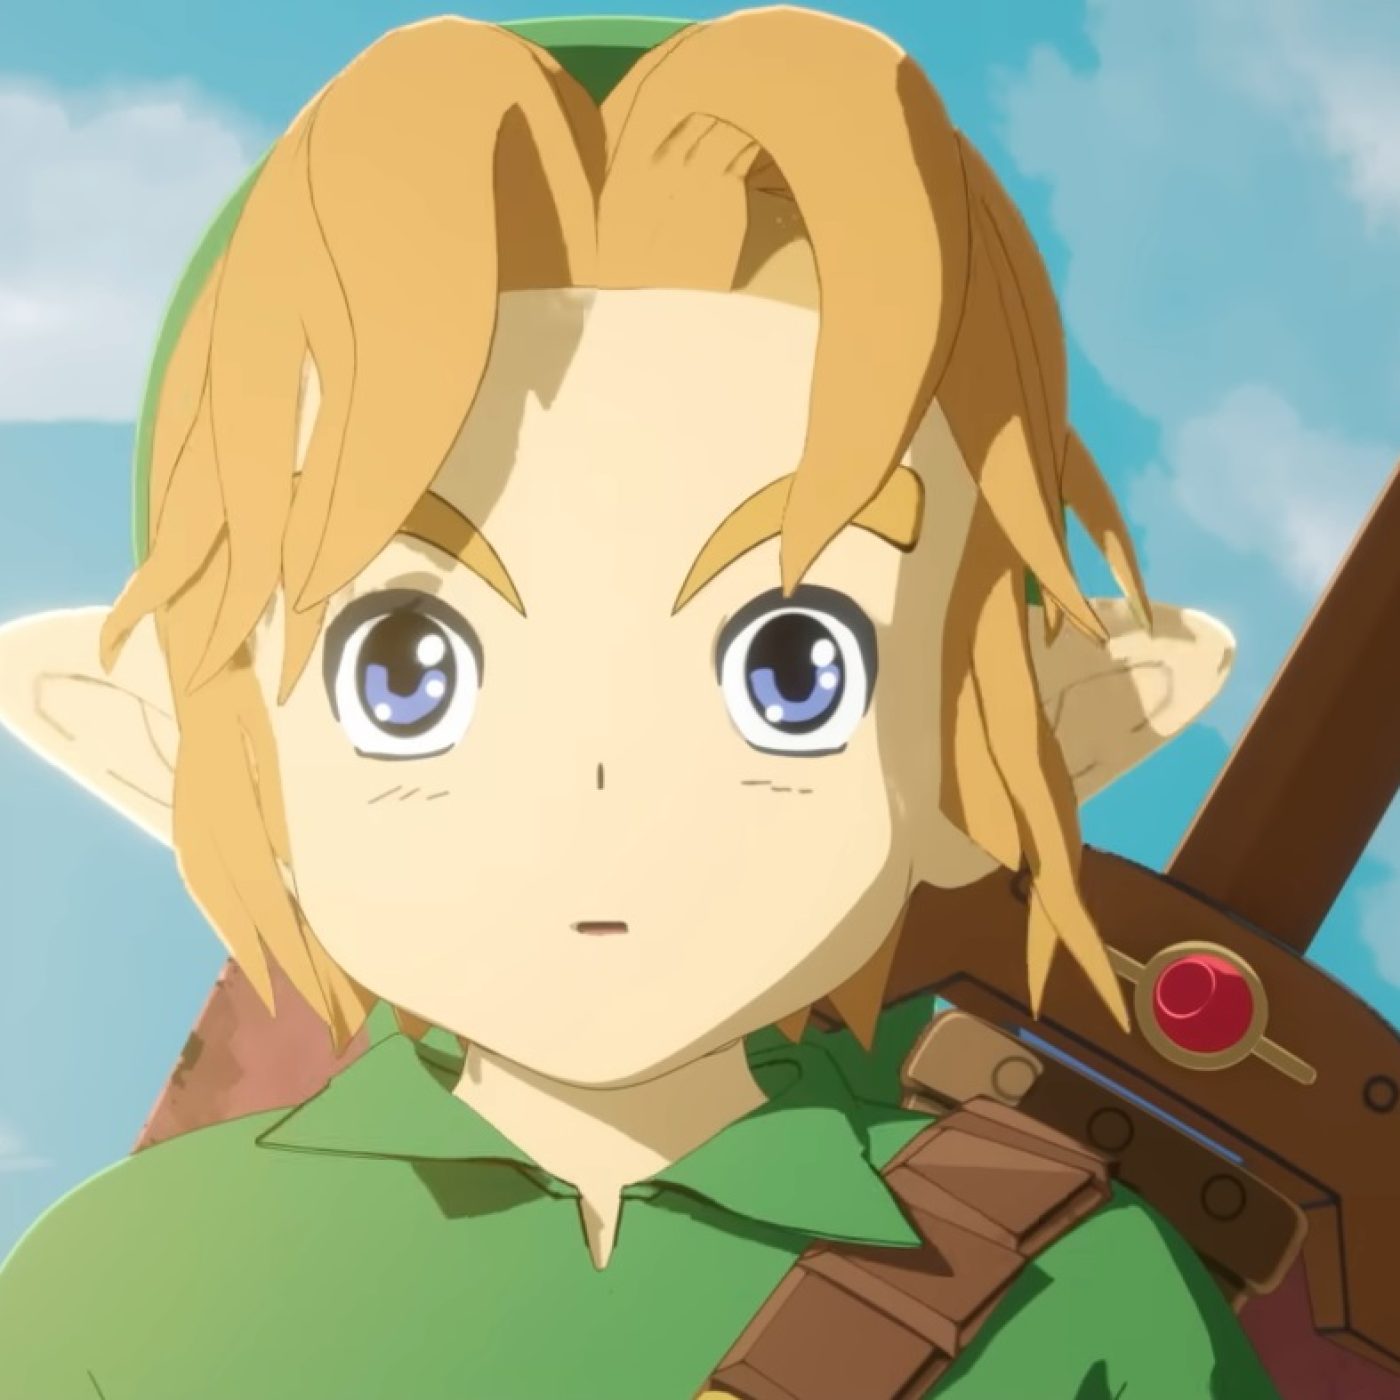 Amazing fan animation turns The Legend of Zelda into a Studio Ghibli movie